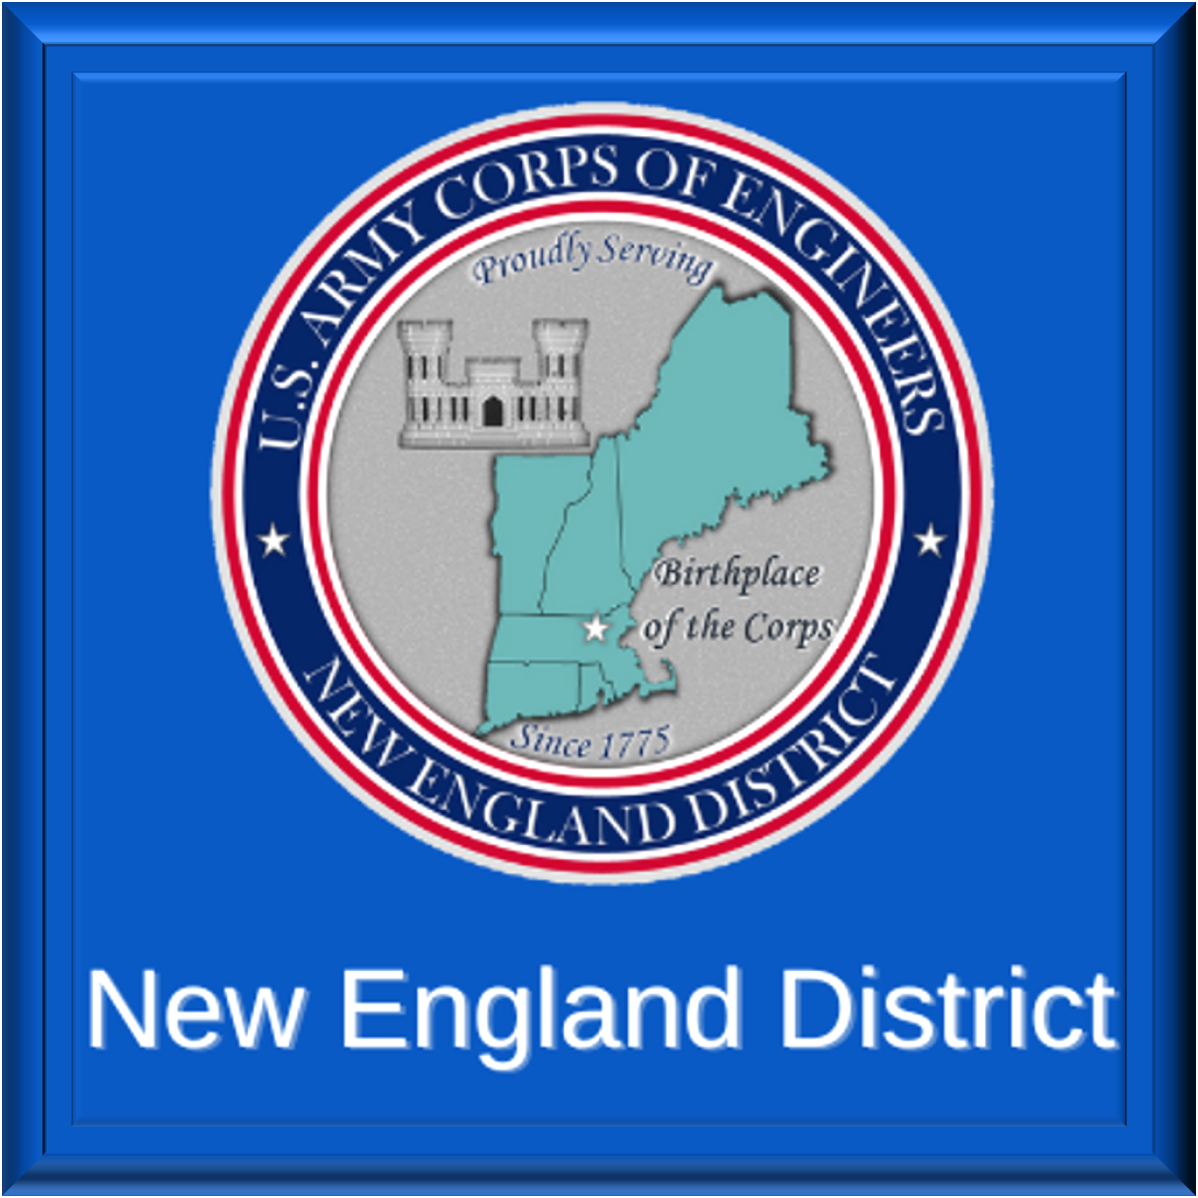 New England District Job Opportunities